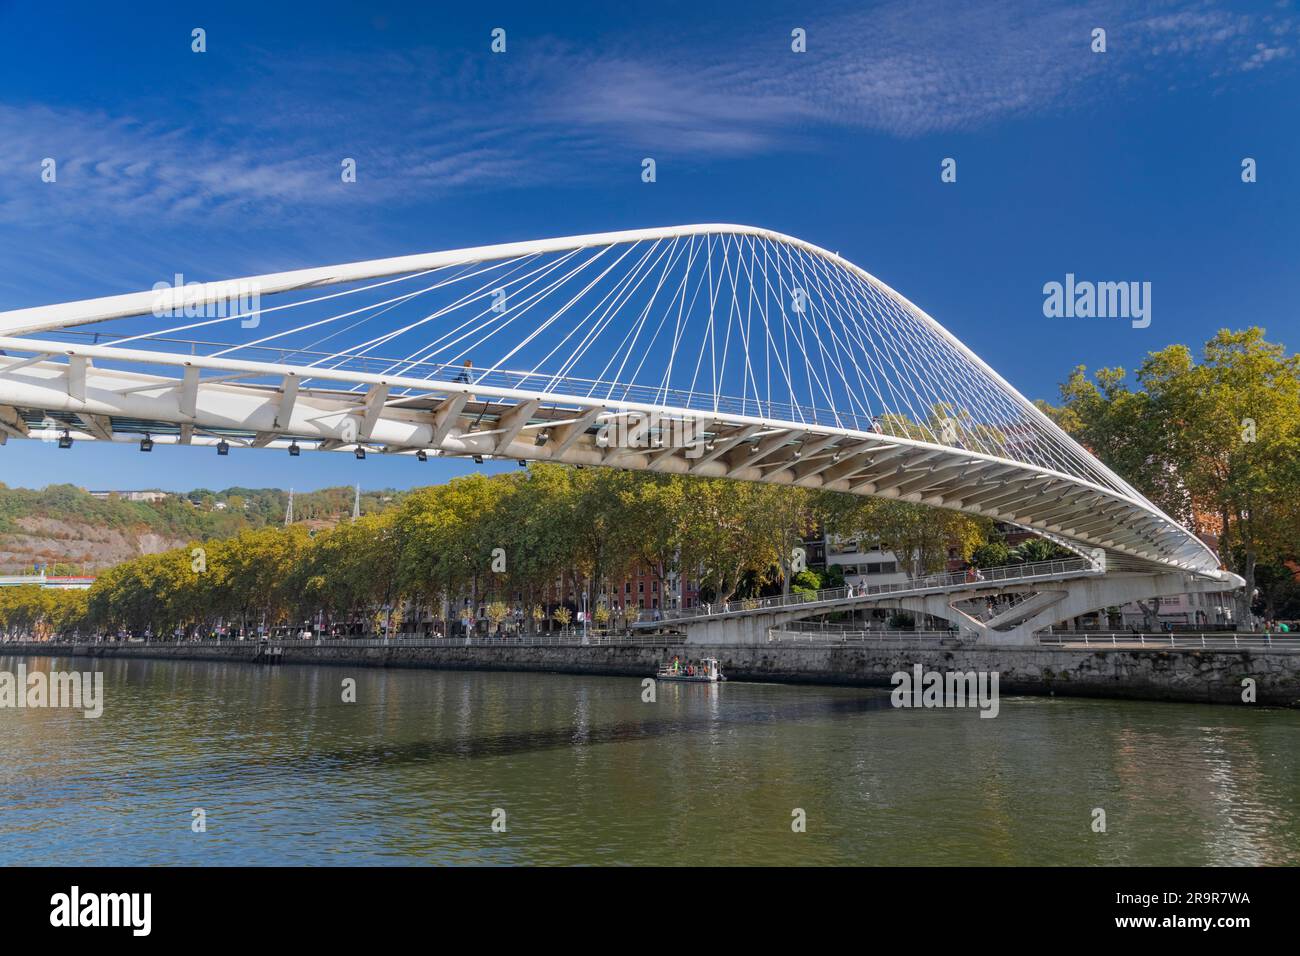 Spain, Basque Country, Bilbao, Zubizuri or White Bridge, tied arch footbridge across the Nervion River designed by Santiago Calatrava and opened in 19 Stock Photo